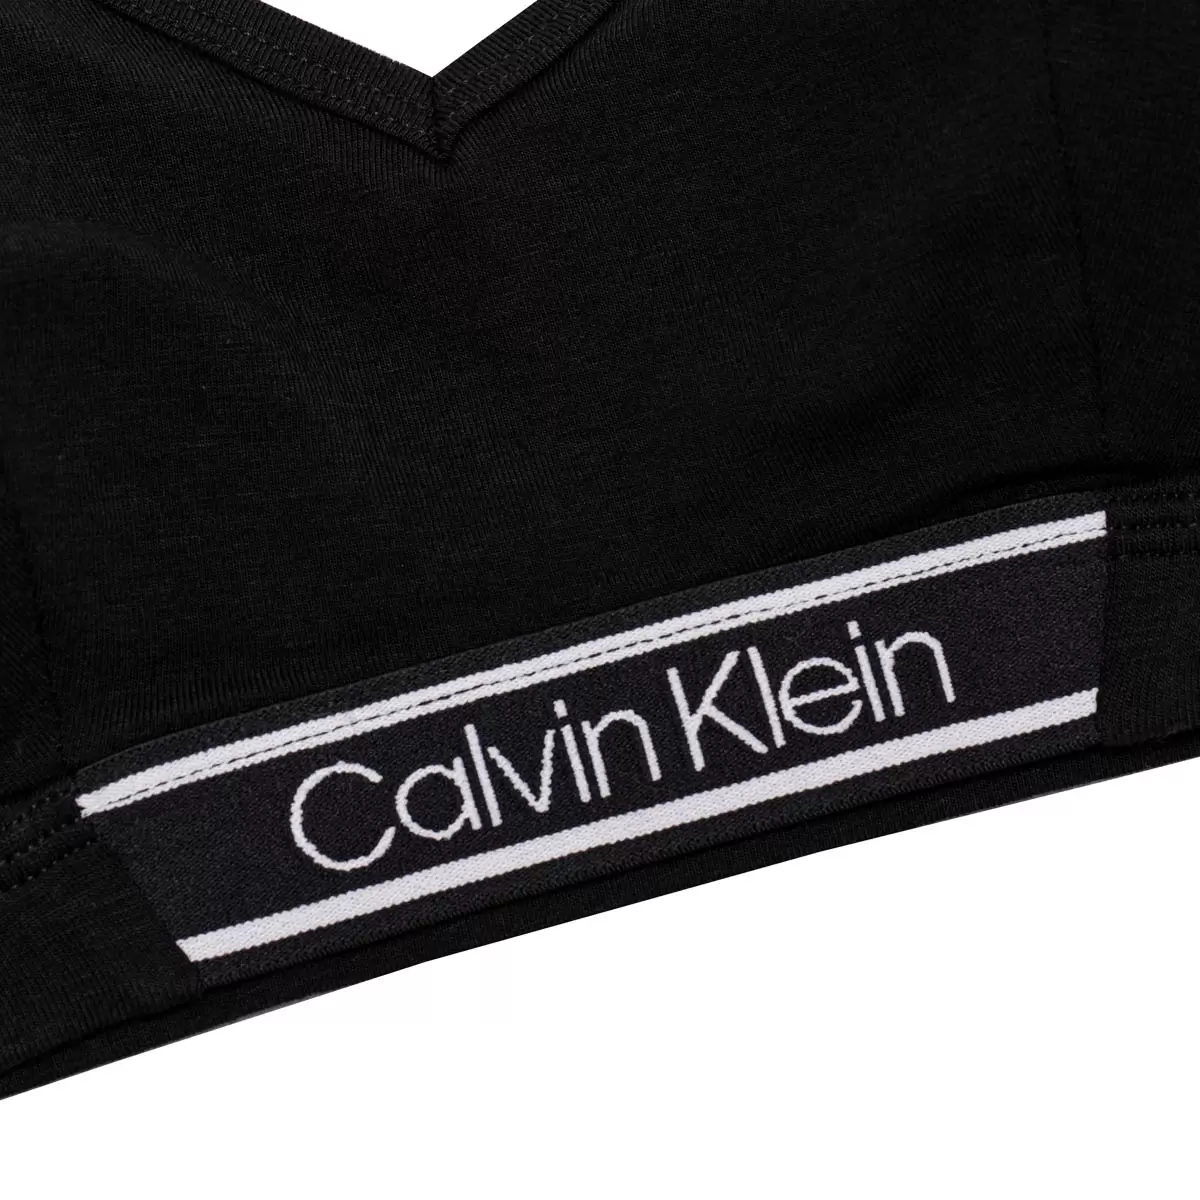 Calvin Klein 女無鋼圈內衣 兩件組 黑 / 粉 L